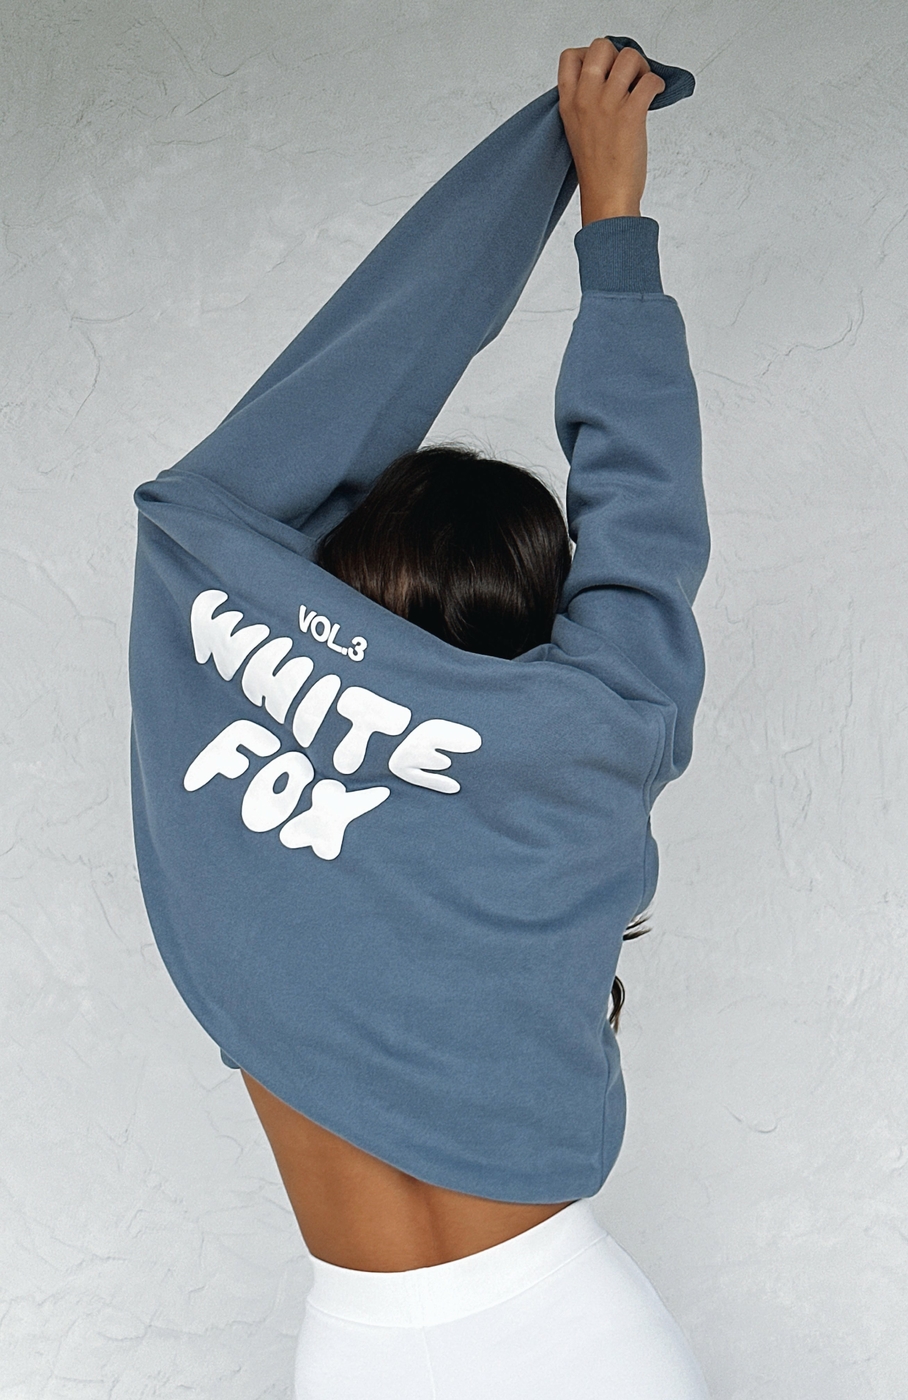 White Fox Boutique AU